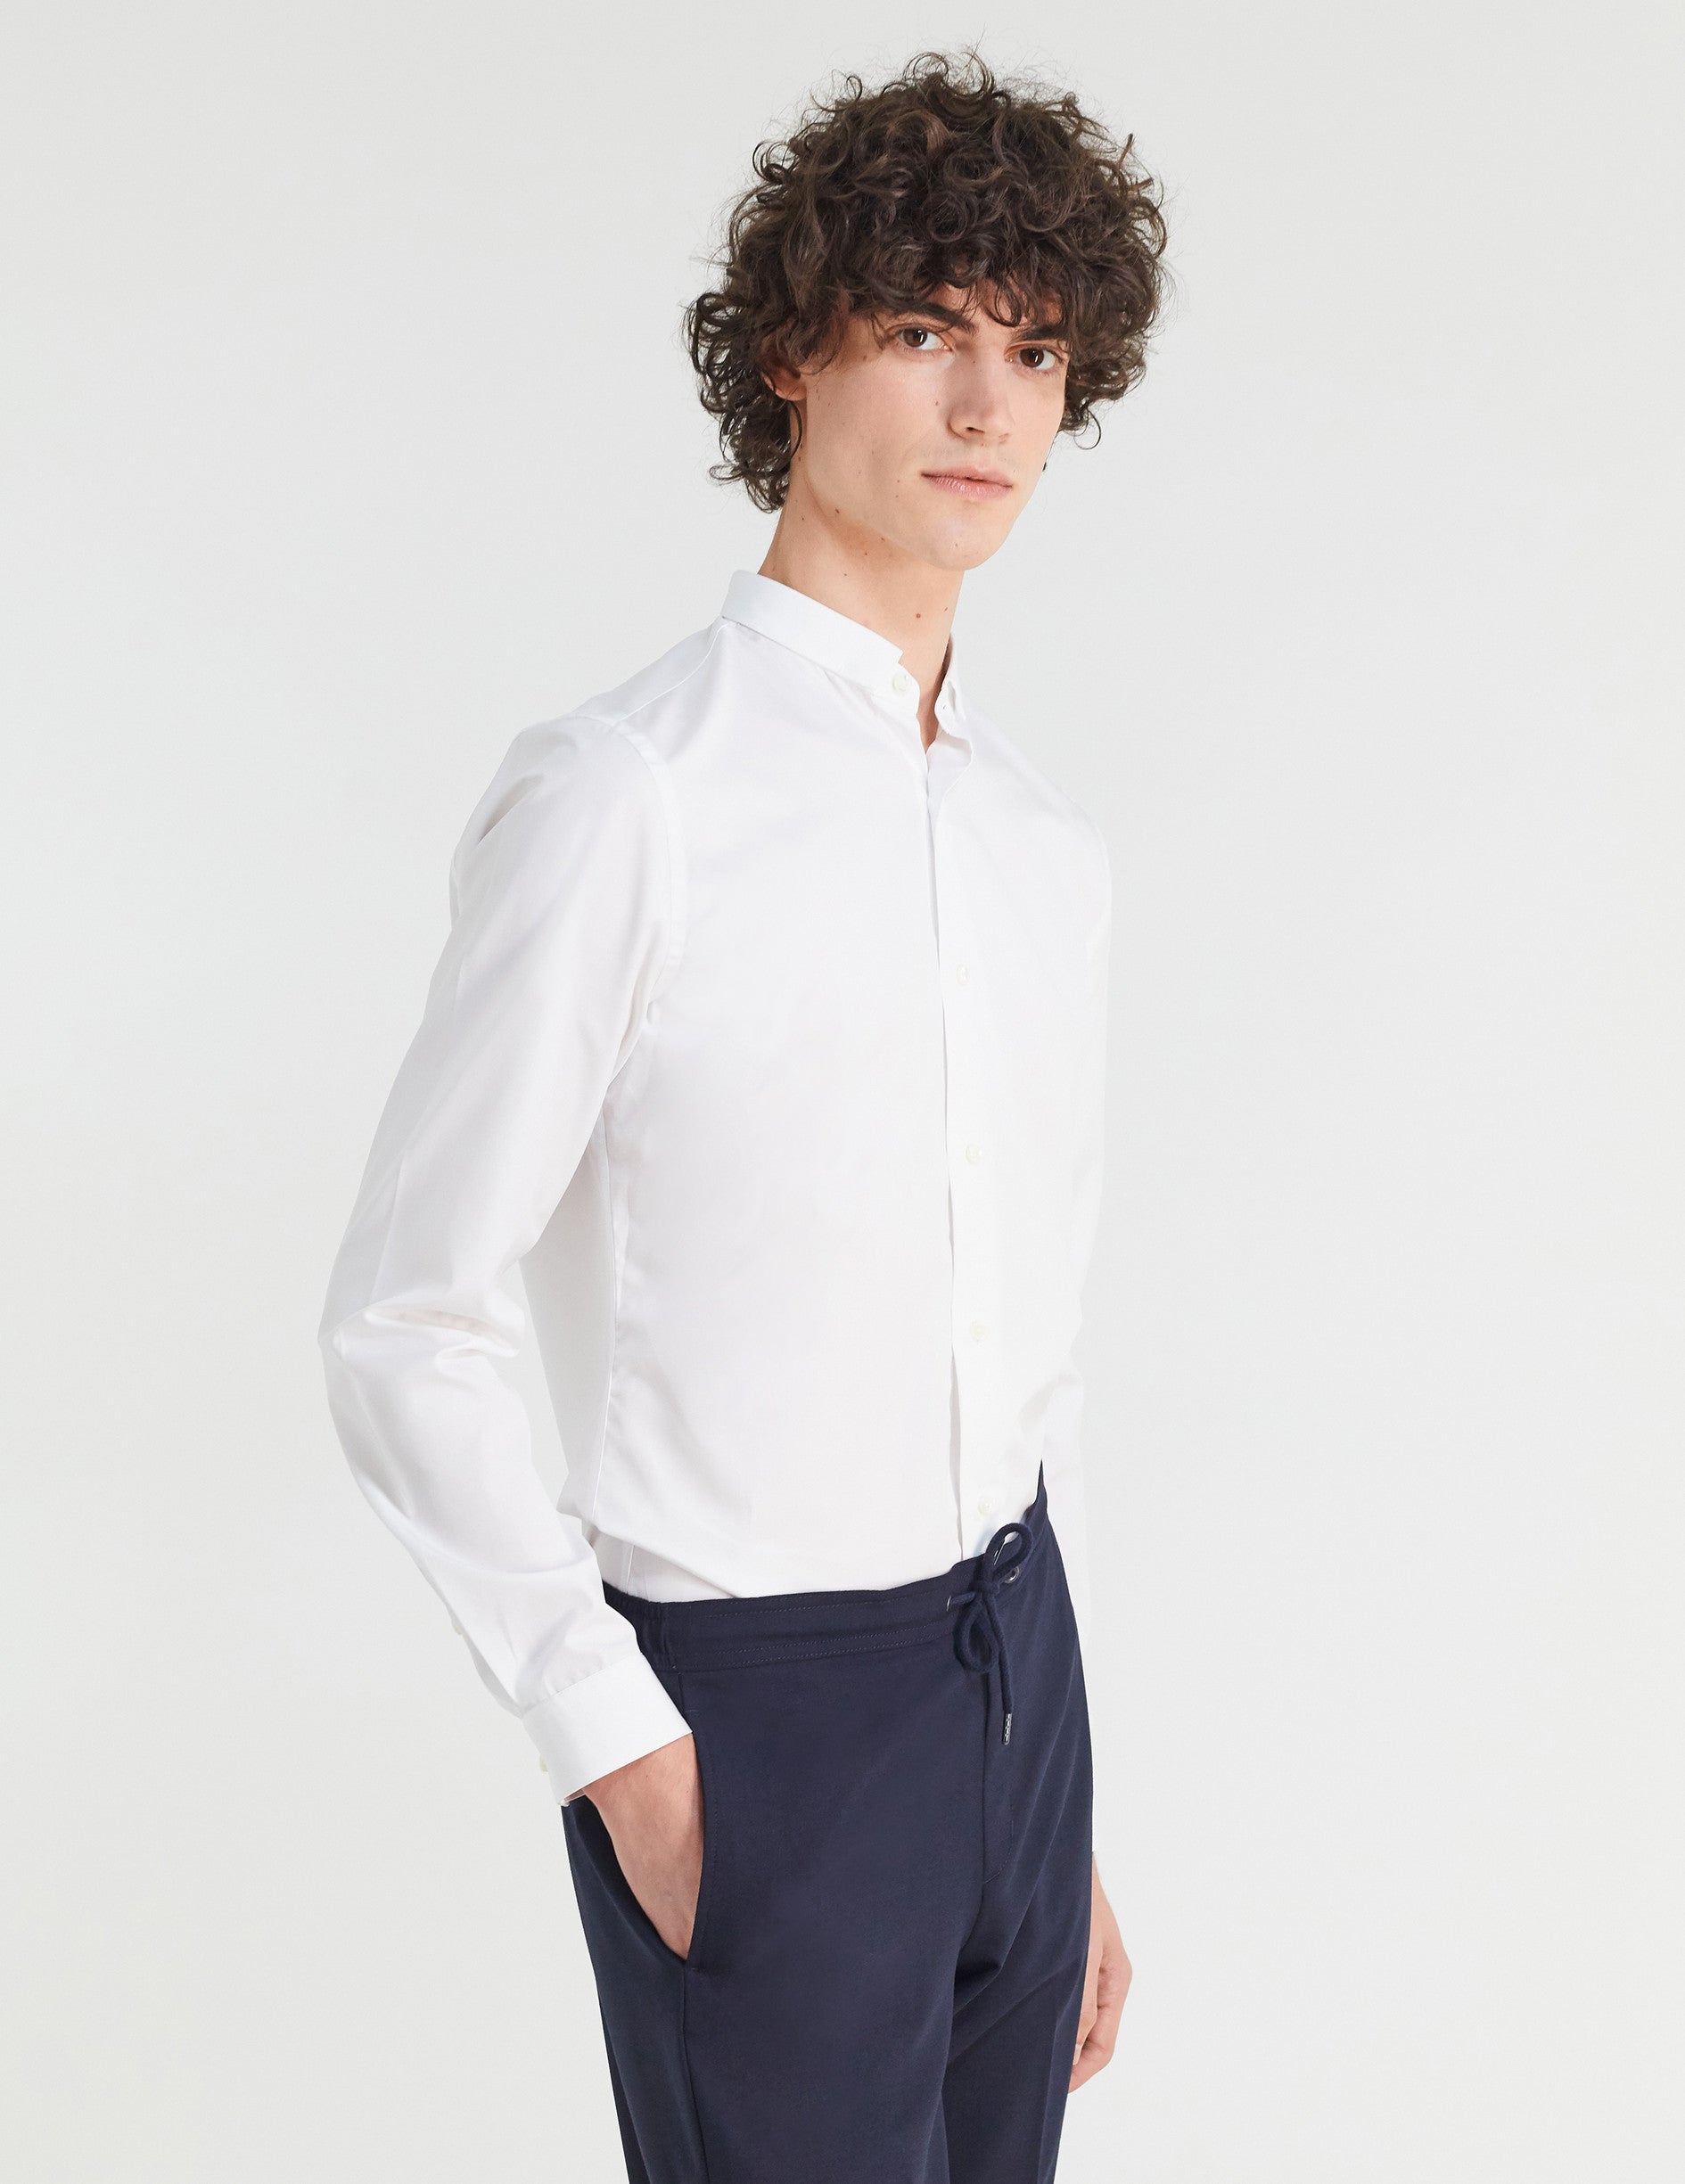 Fitted white shirt - Poplin - Sewn Collar